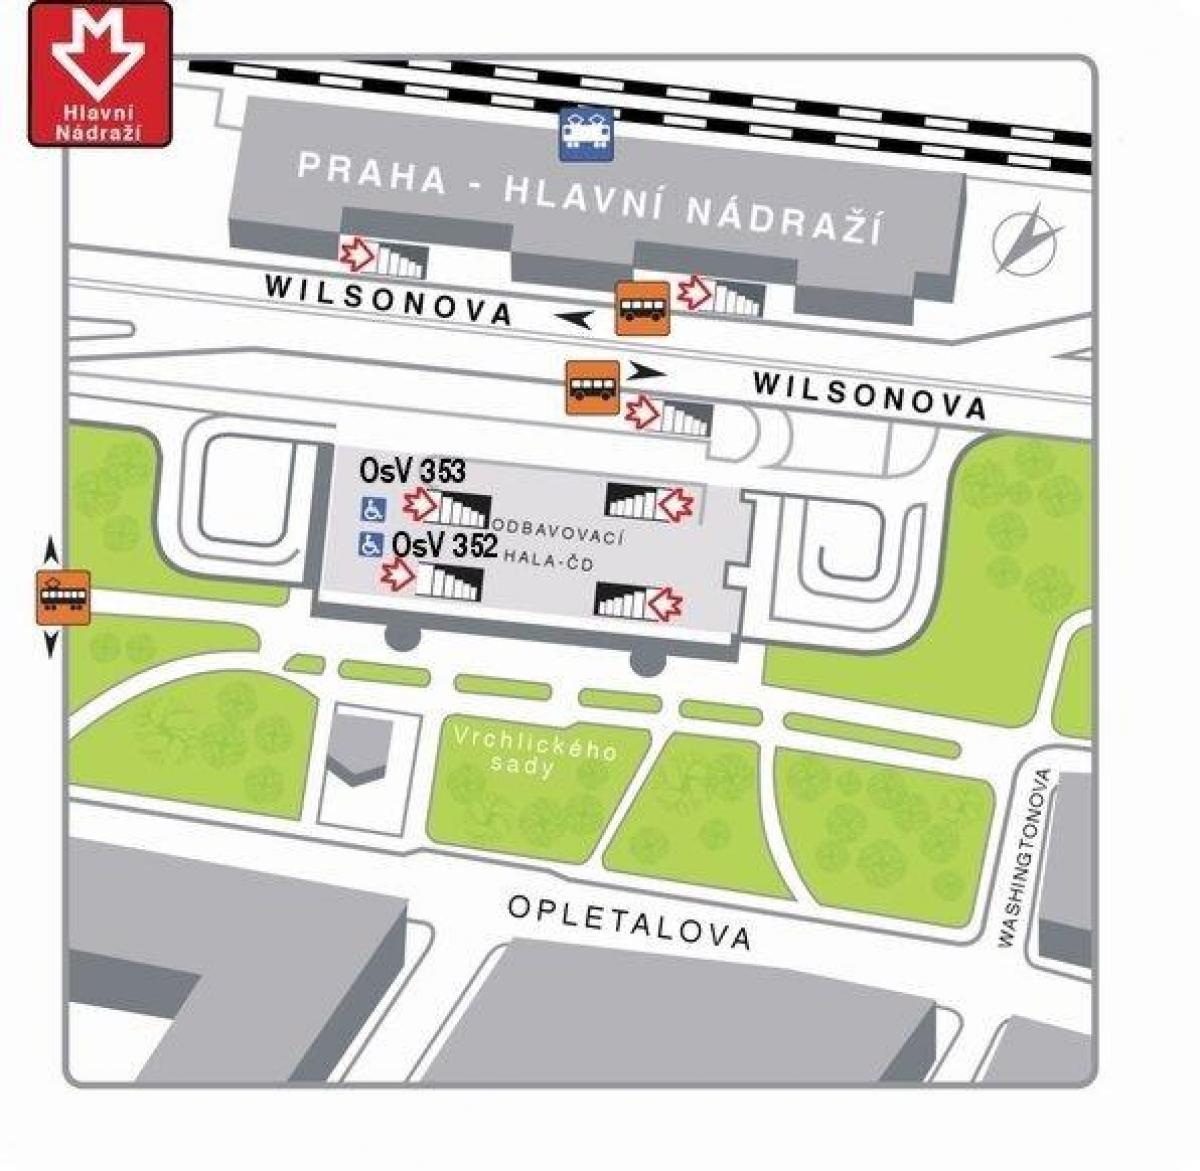 Prags centralstation karta - Karta över prags ...